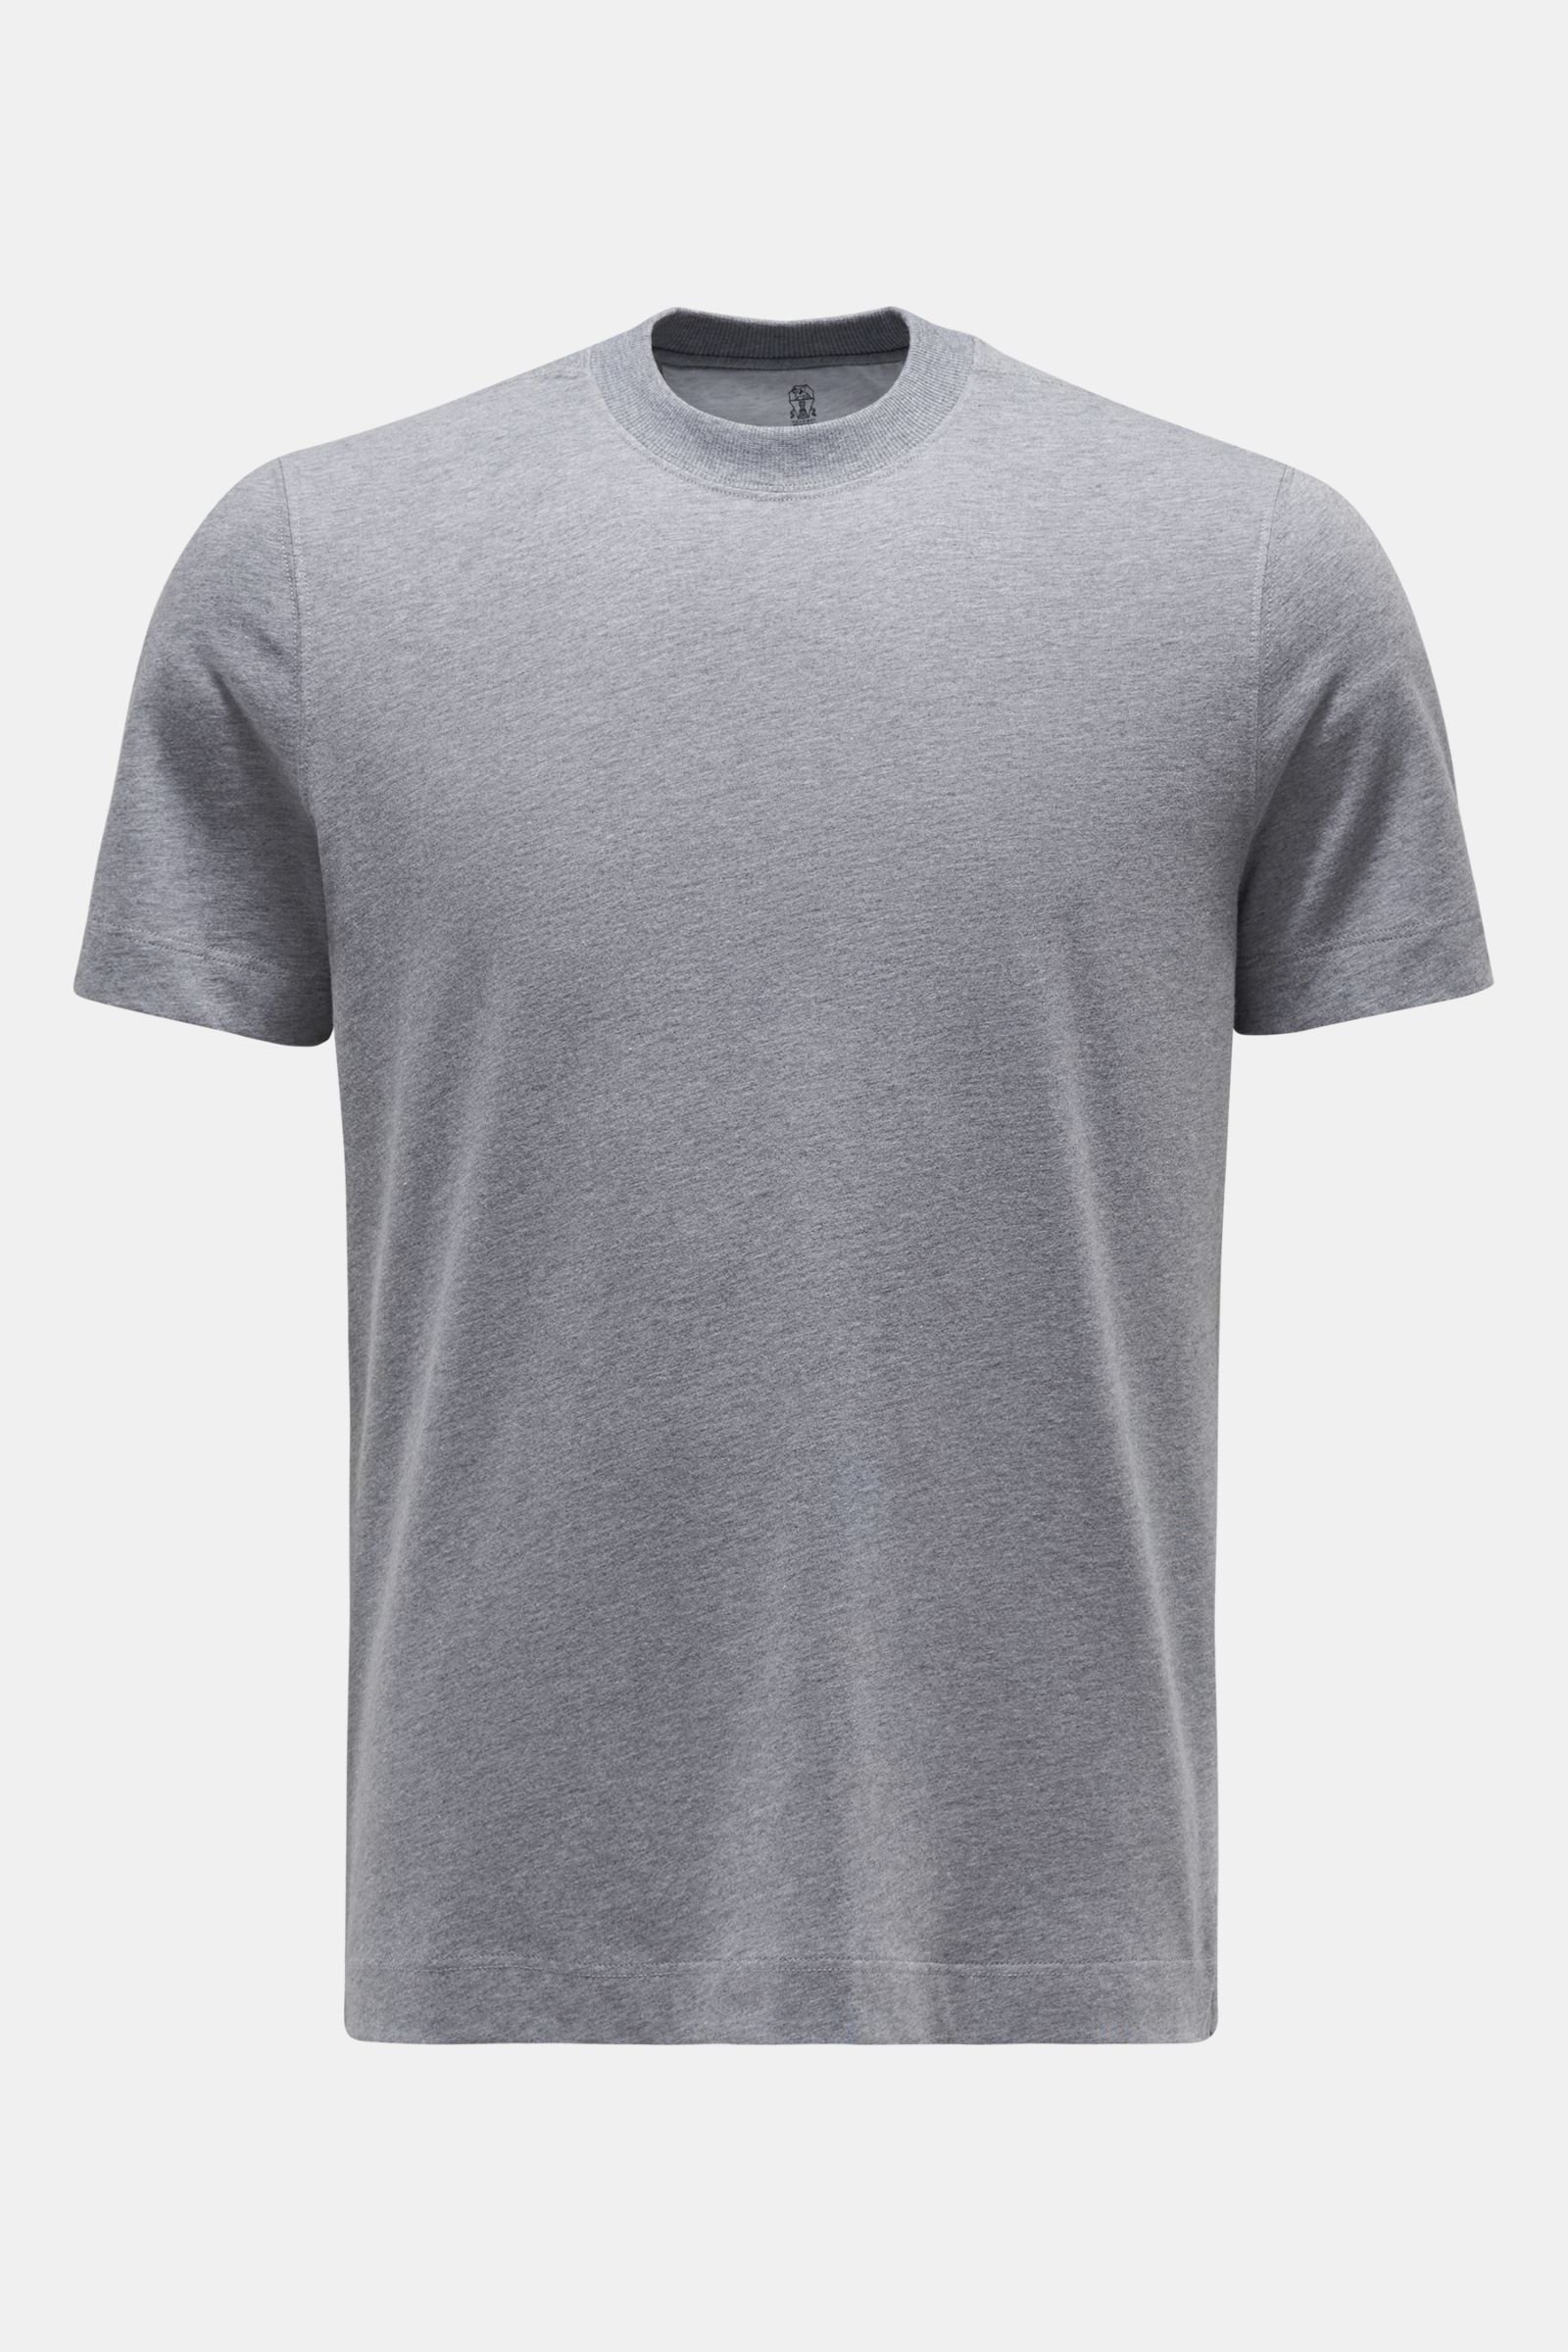 grey cotton t shirt